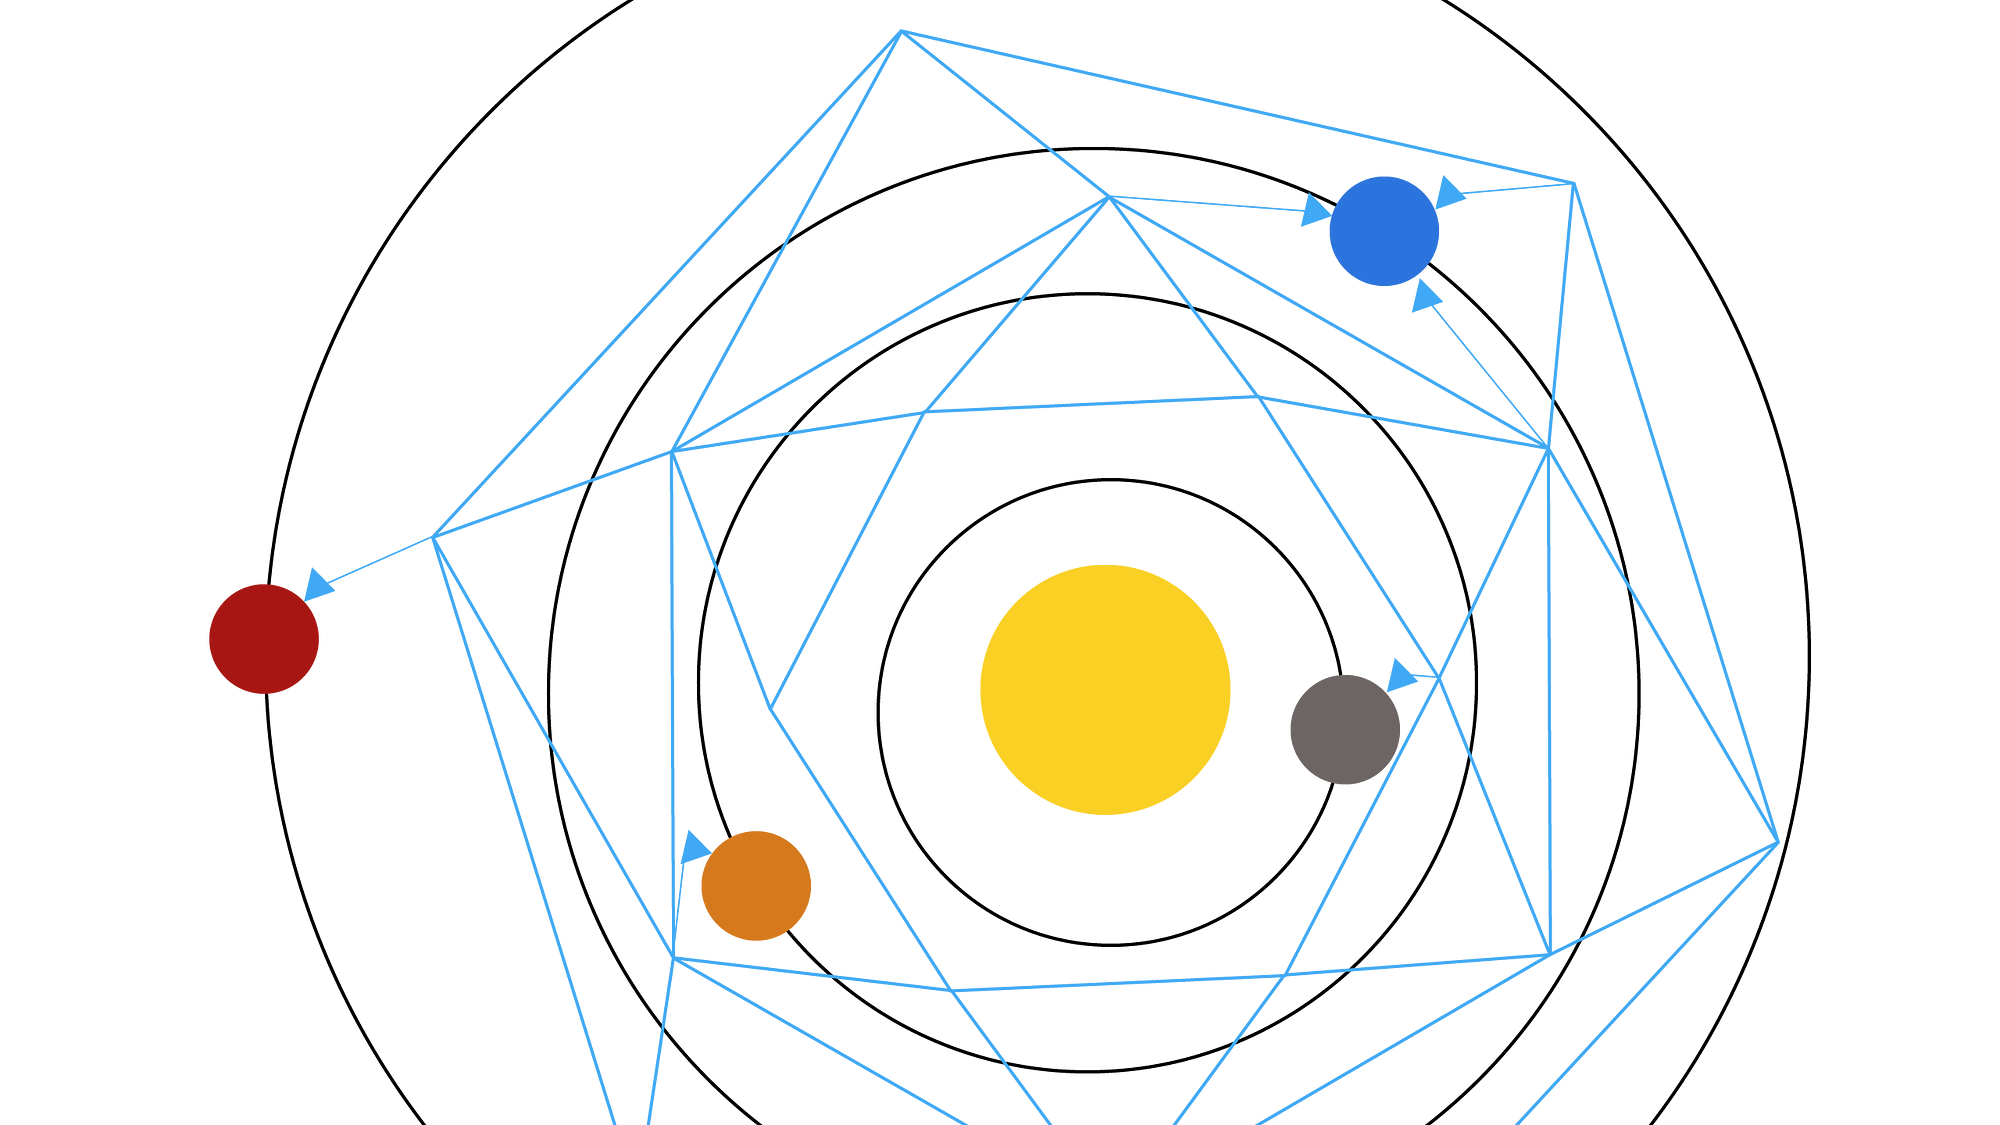 File:NetworkTopology-Mesh.svg - Wikipedia